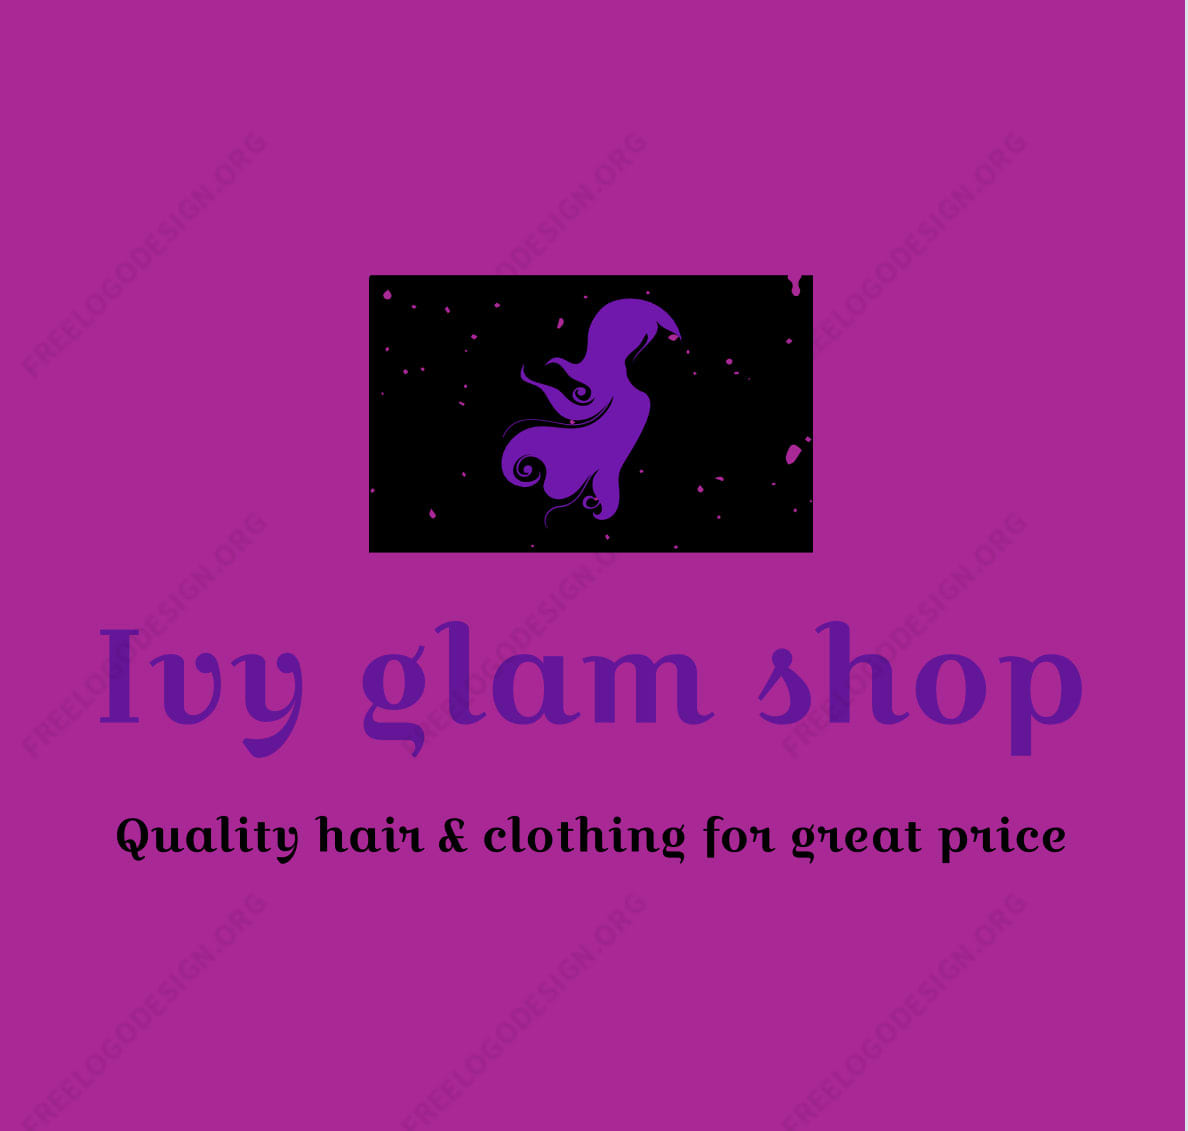 Ivy Glam Shop